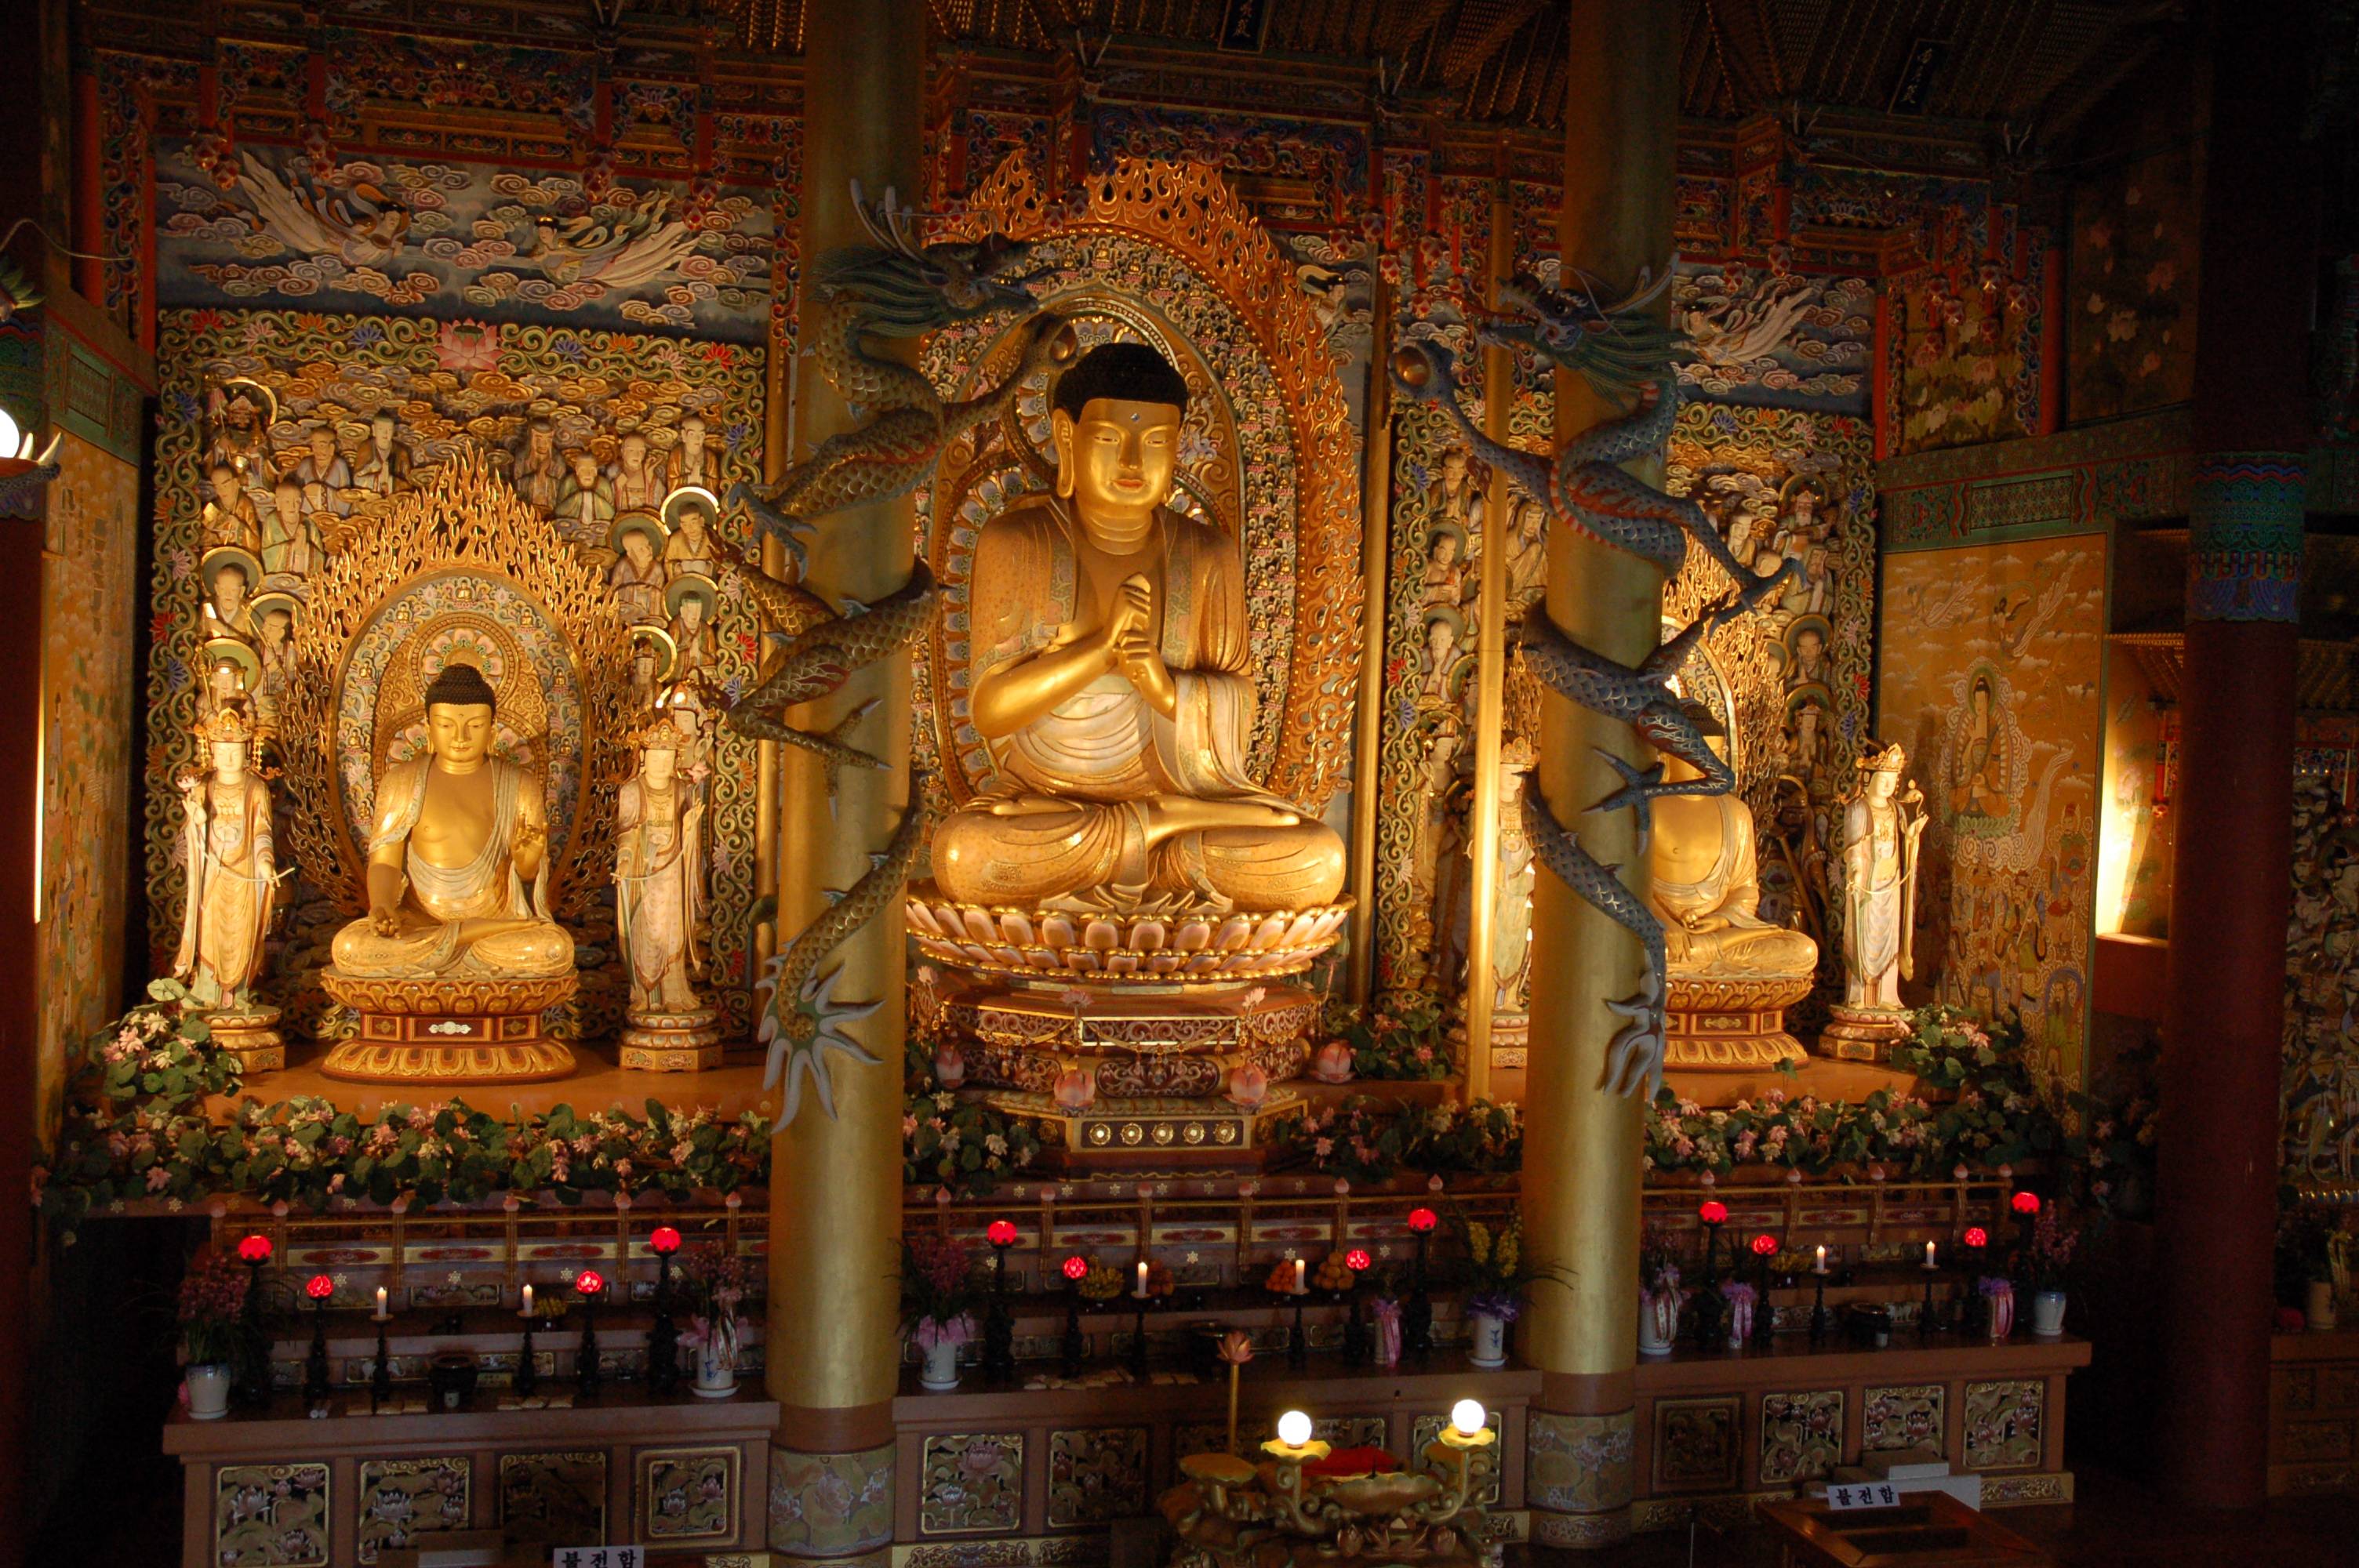 Buddhism Wallpaper, Buddhist, Buddha Wallpaper